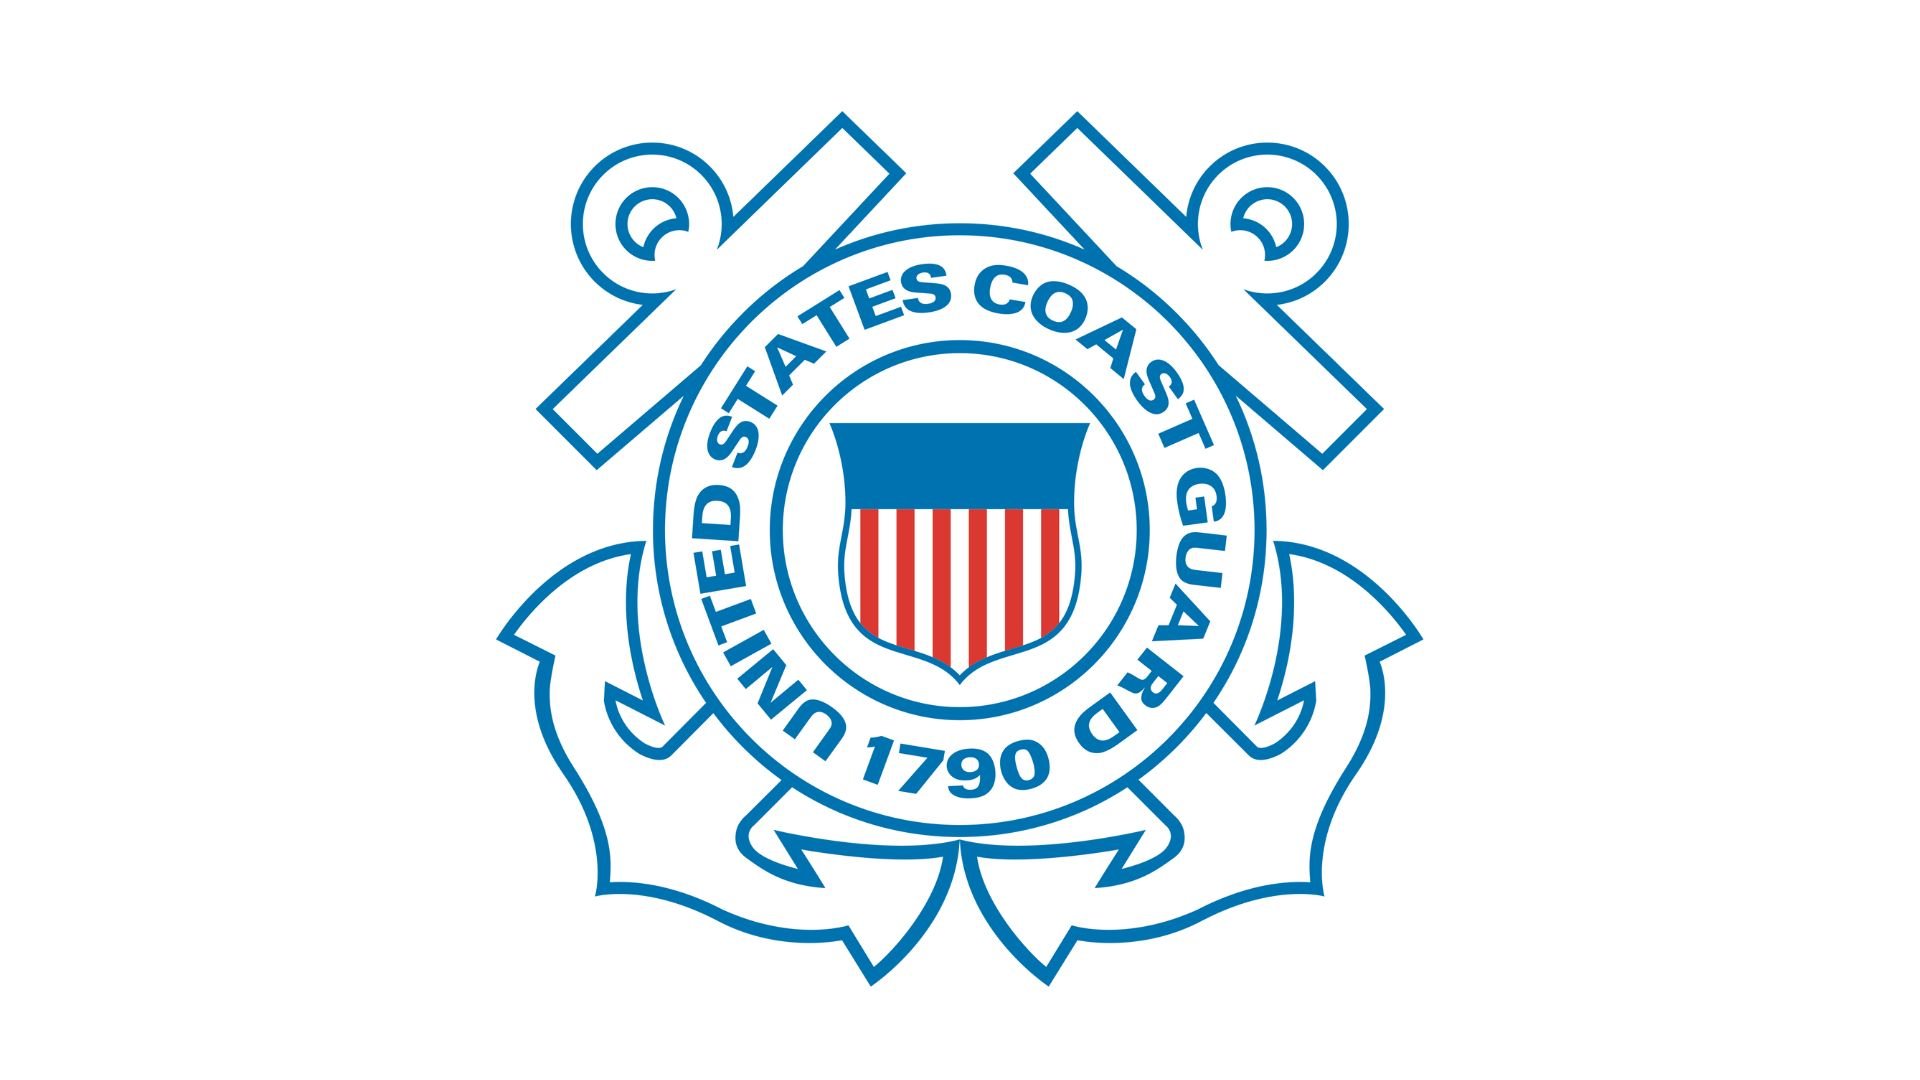 Complete Logistics Support CLSSERVE Coast Guard Logo Blue on White Background.jpg